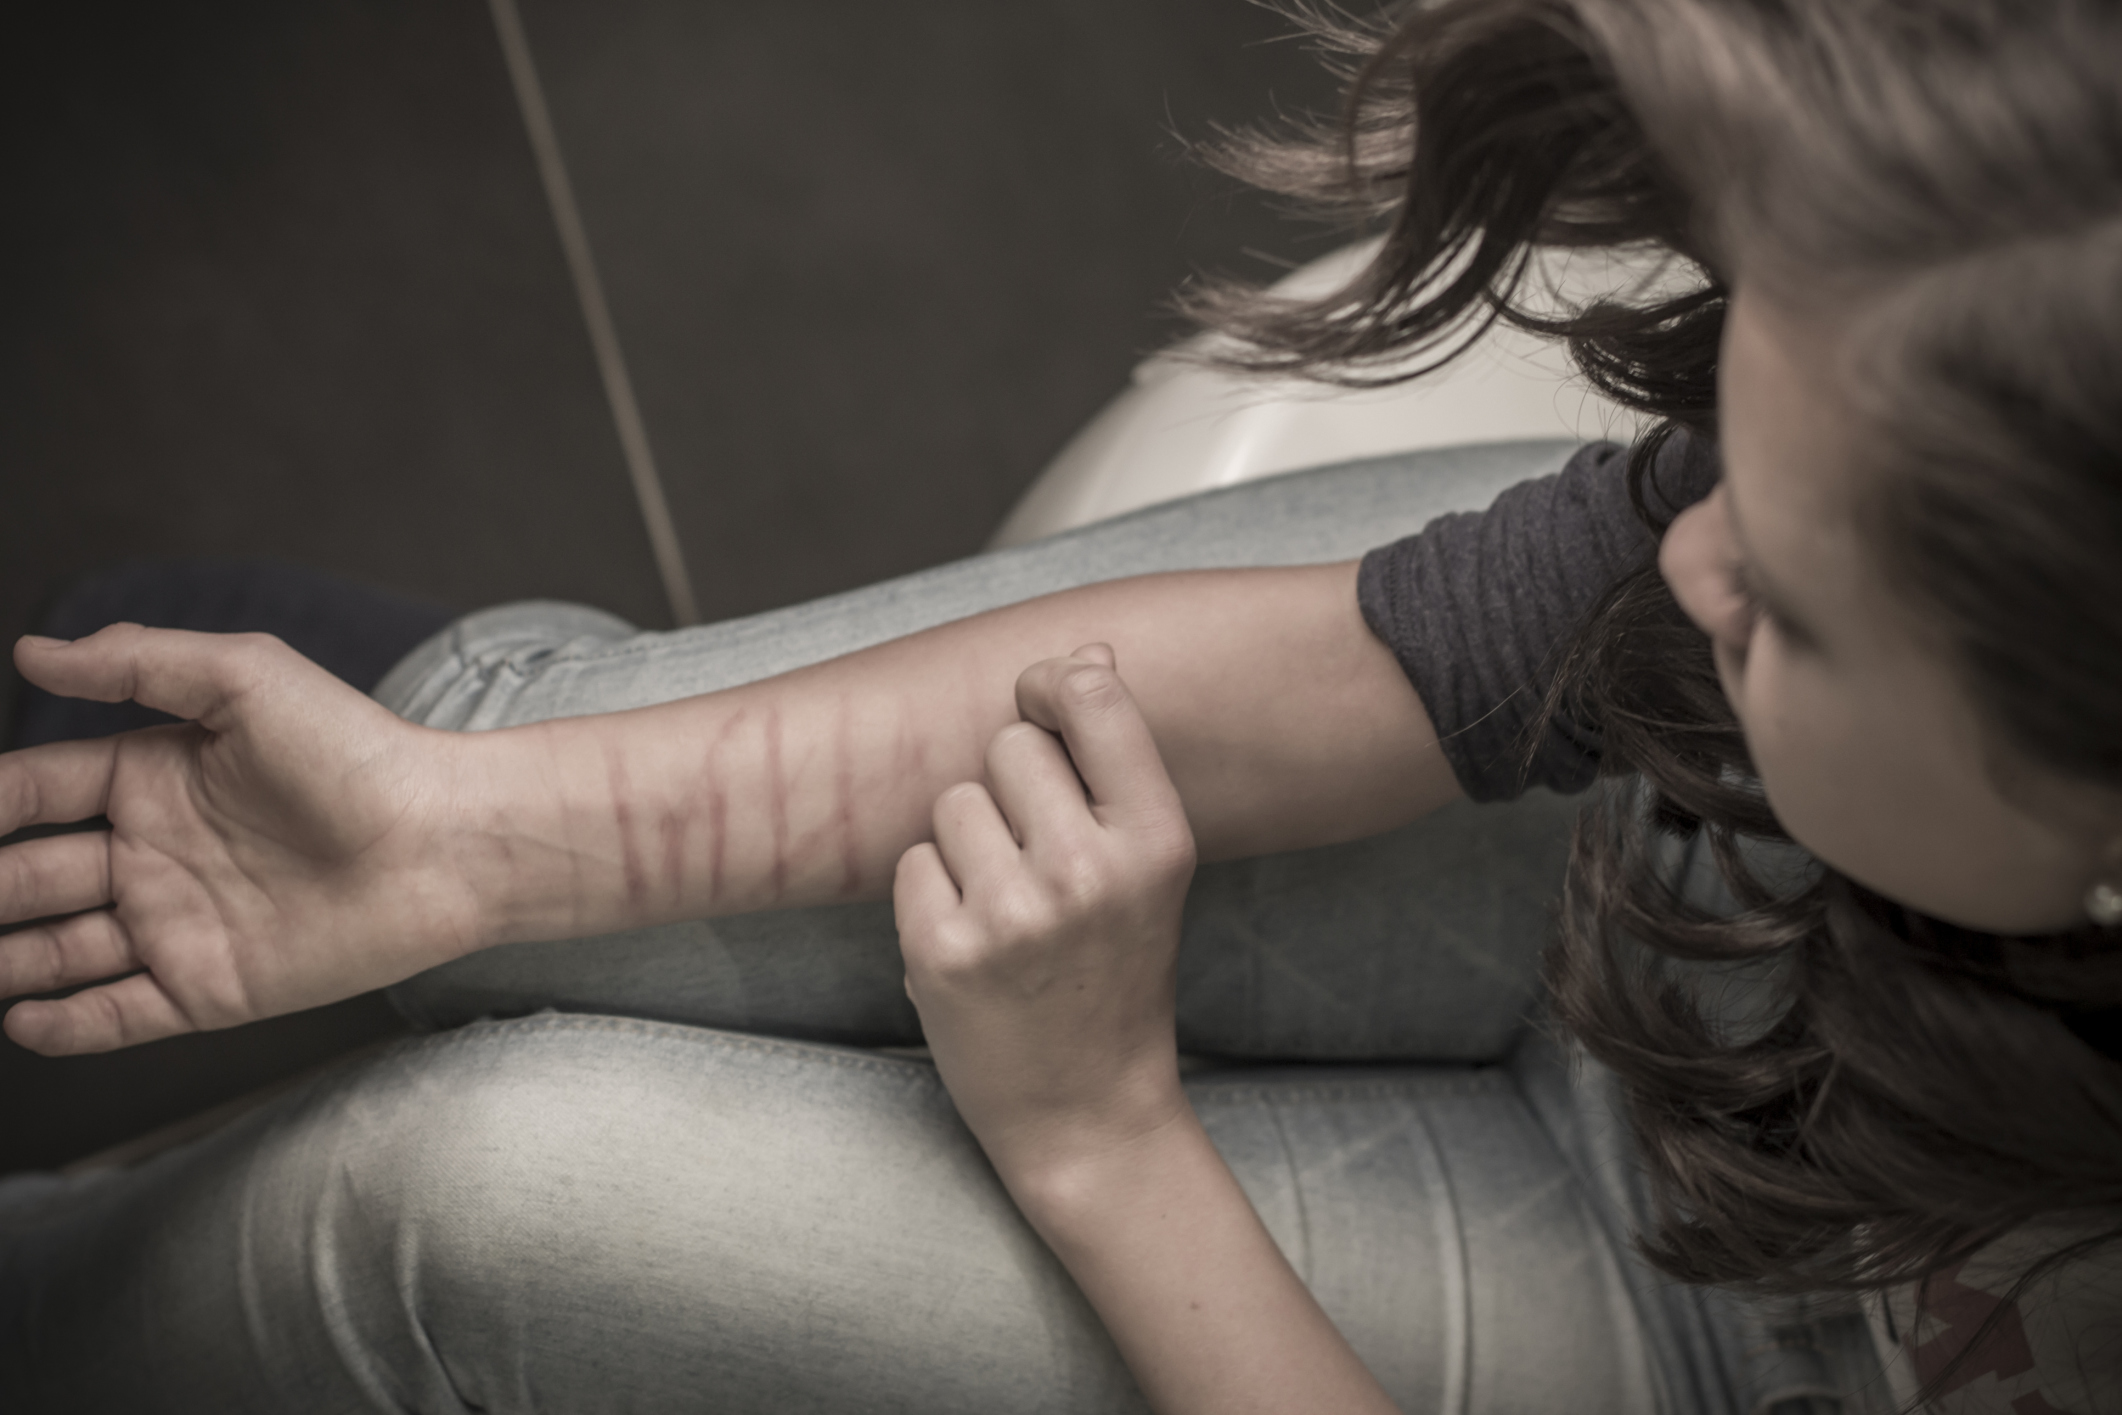 teens cutting self mutilation sexy photo